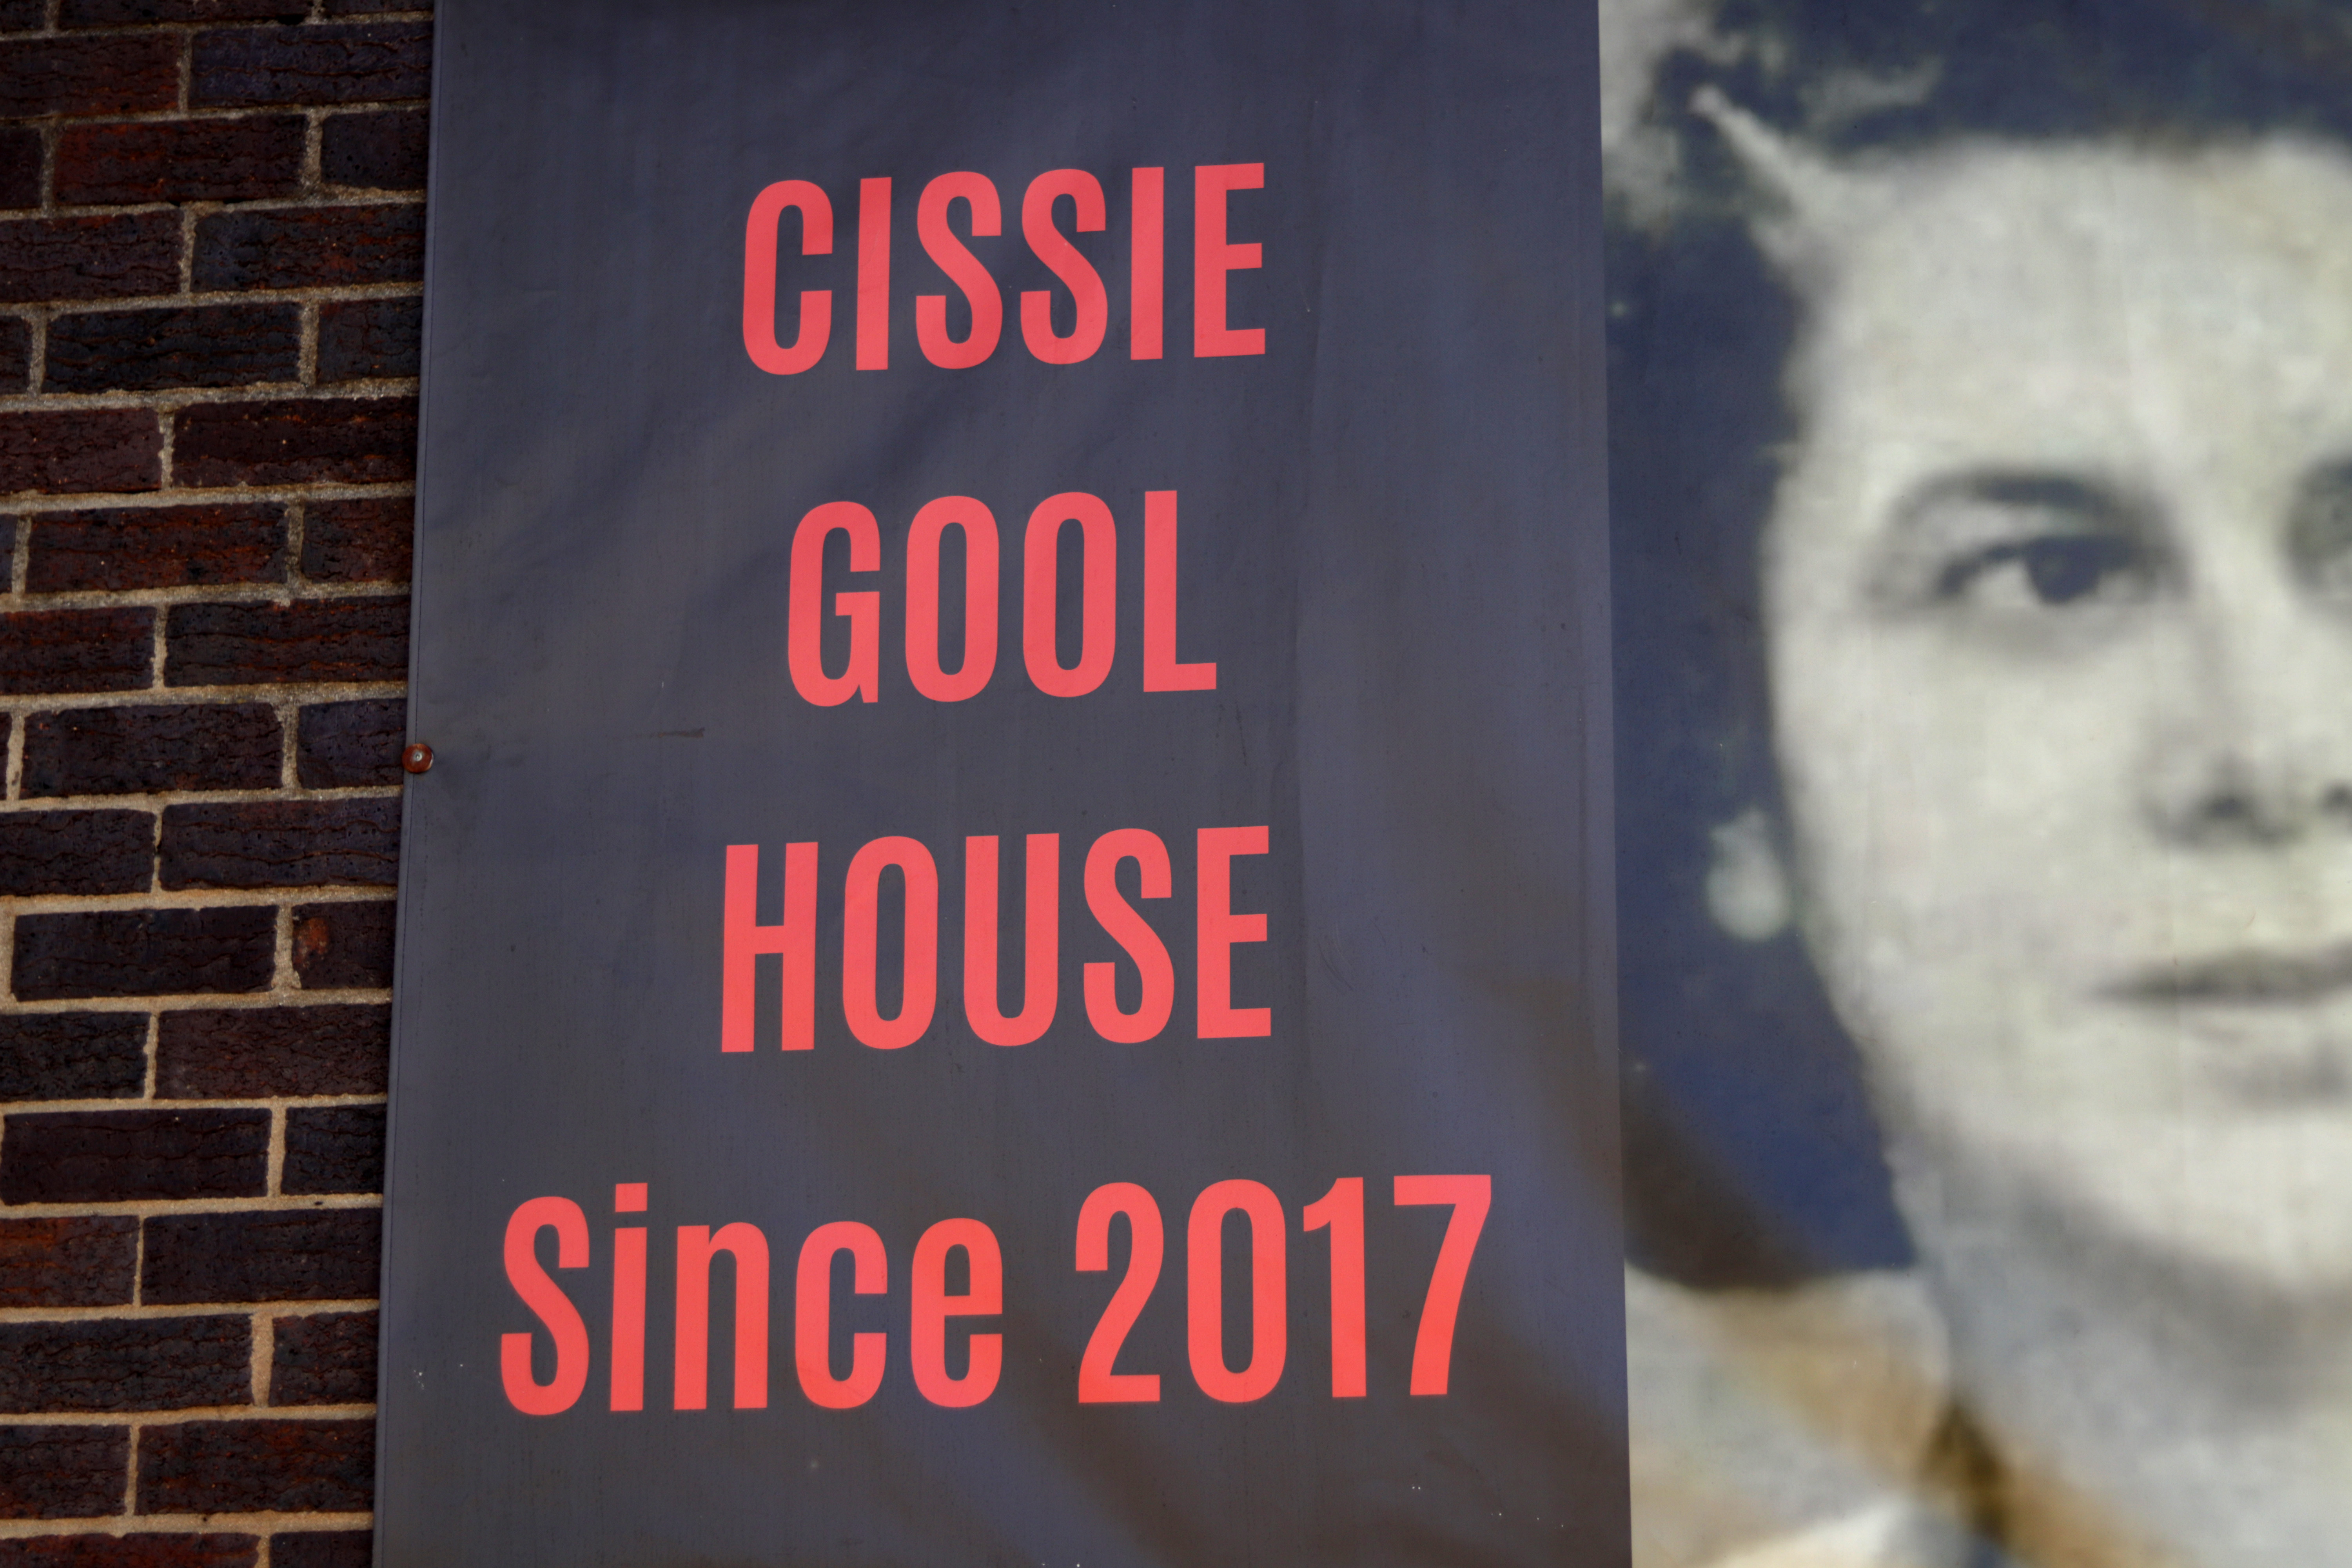 Cissie Gool House